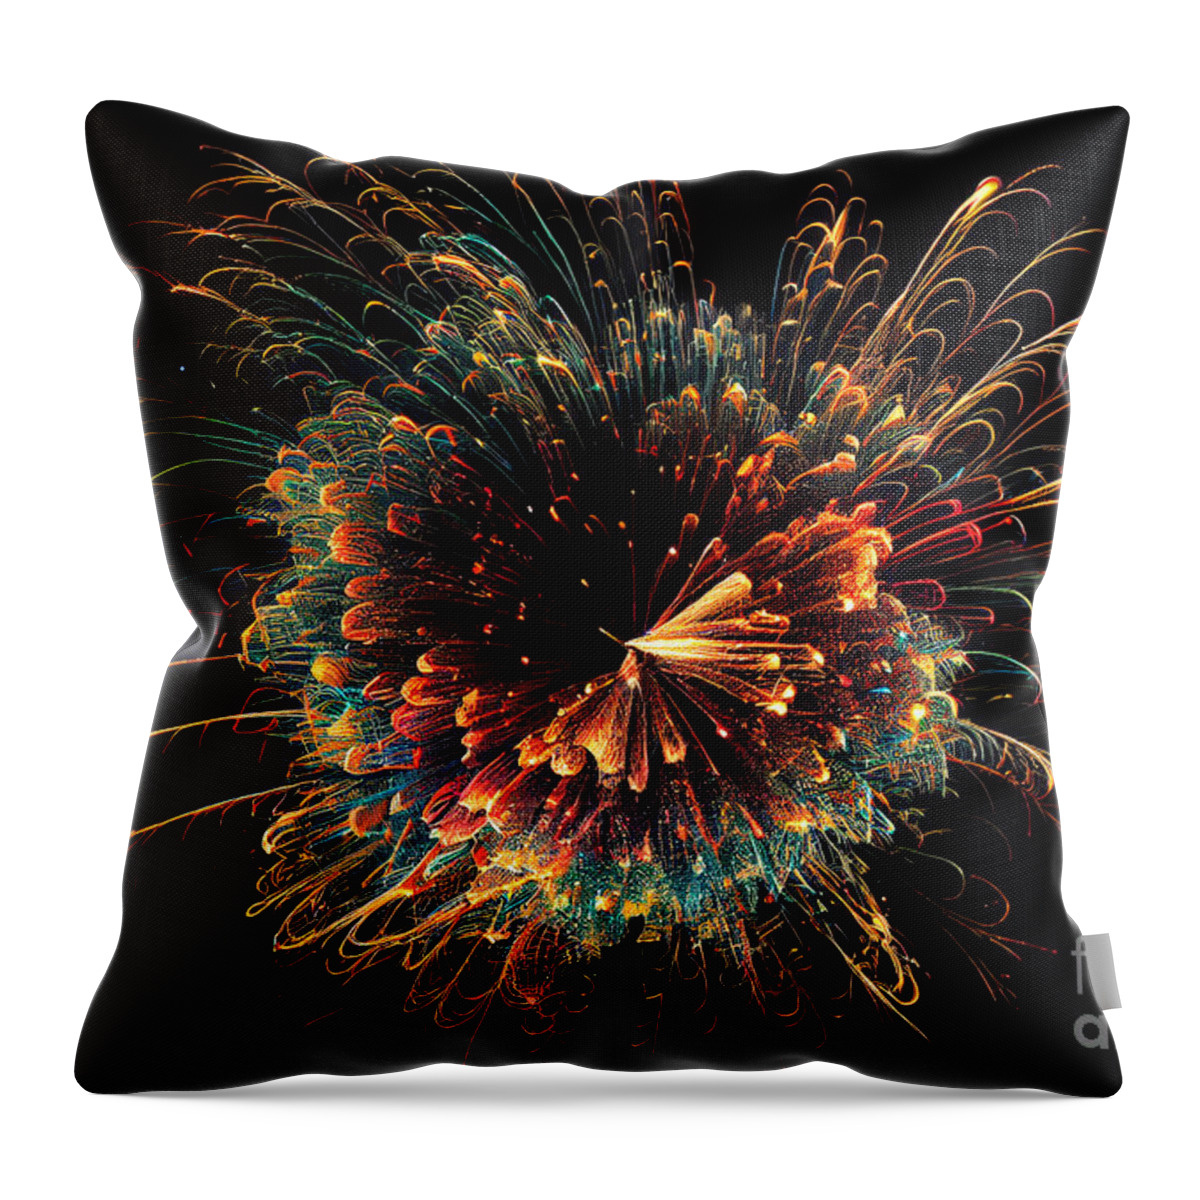 Series Throw Pillow featuring the digital art Fireworks magic #8 by Sabantha